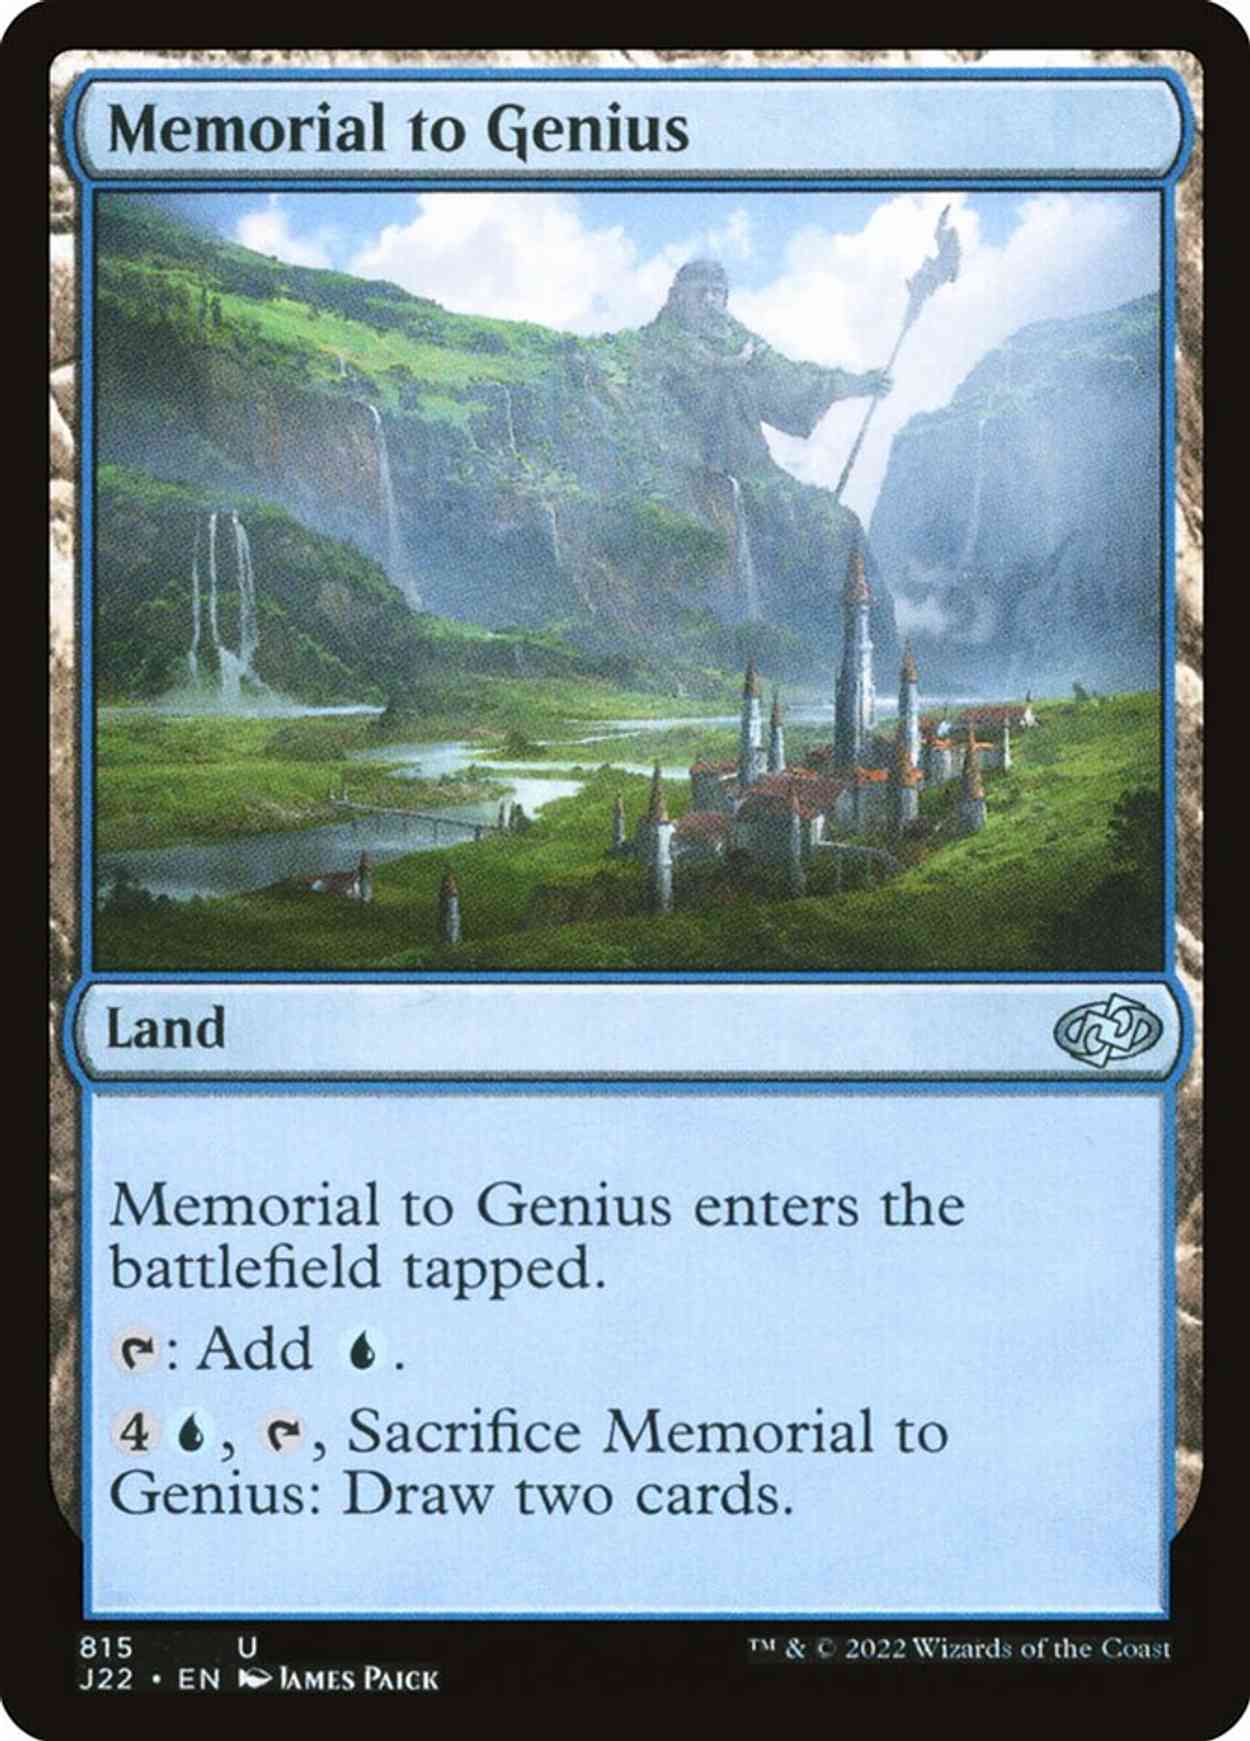 Memorial to Genius magic card front